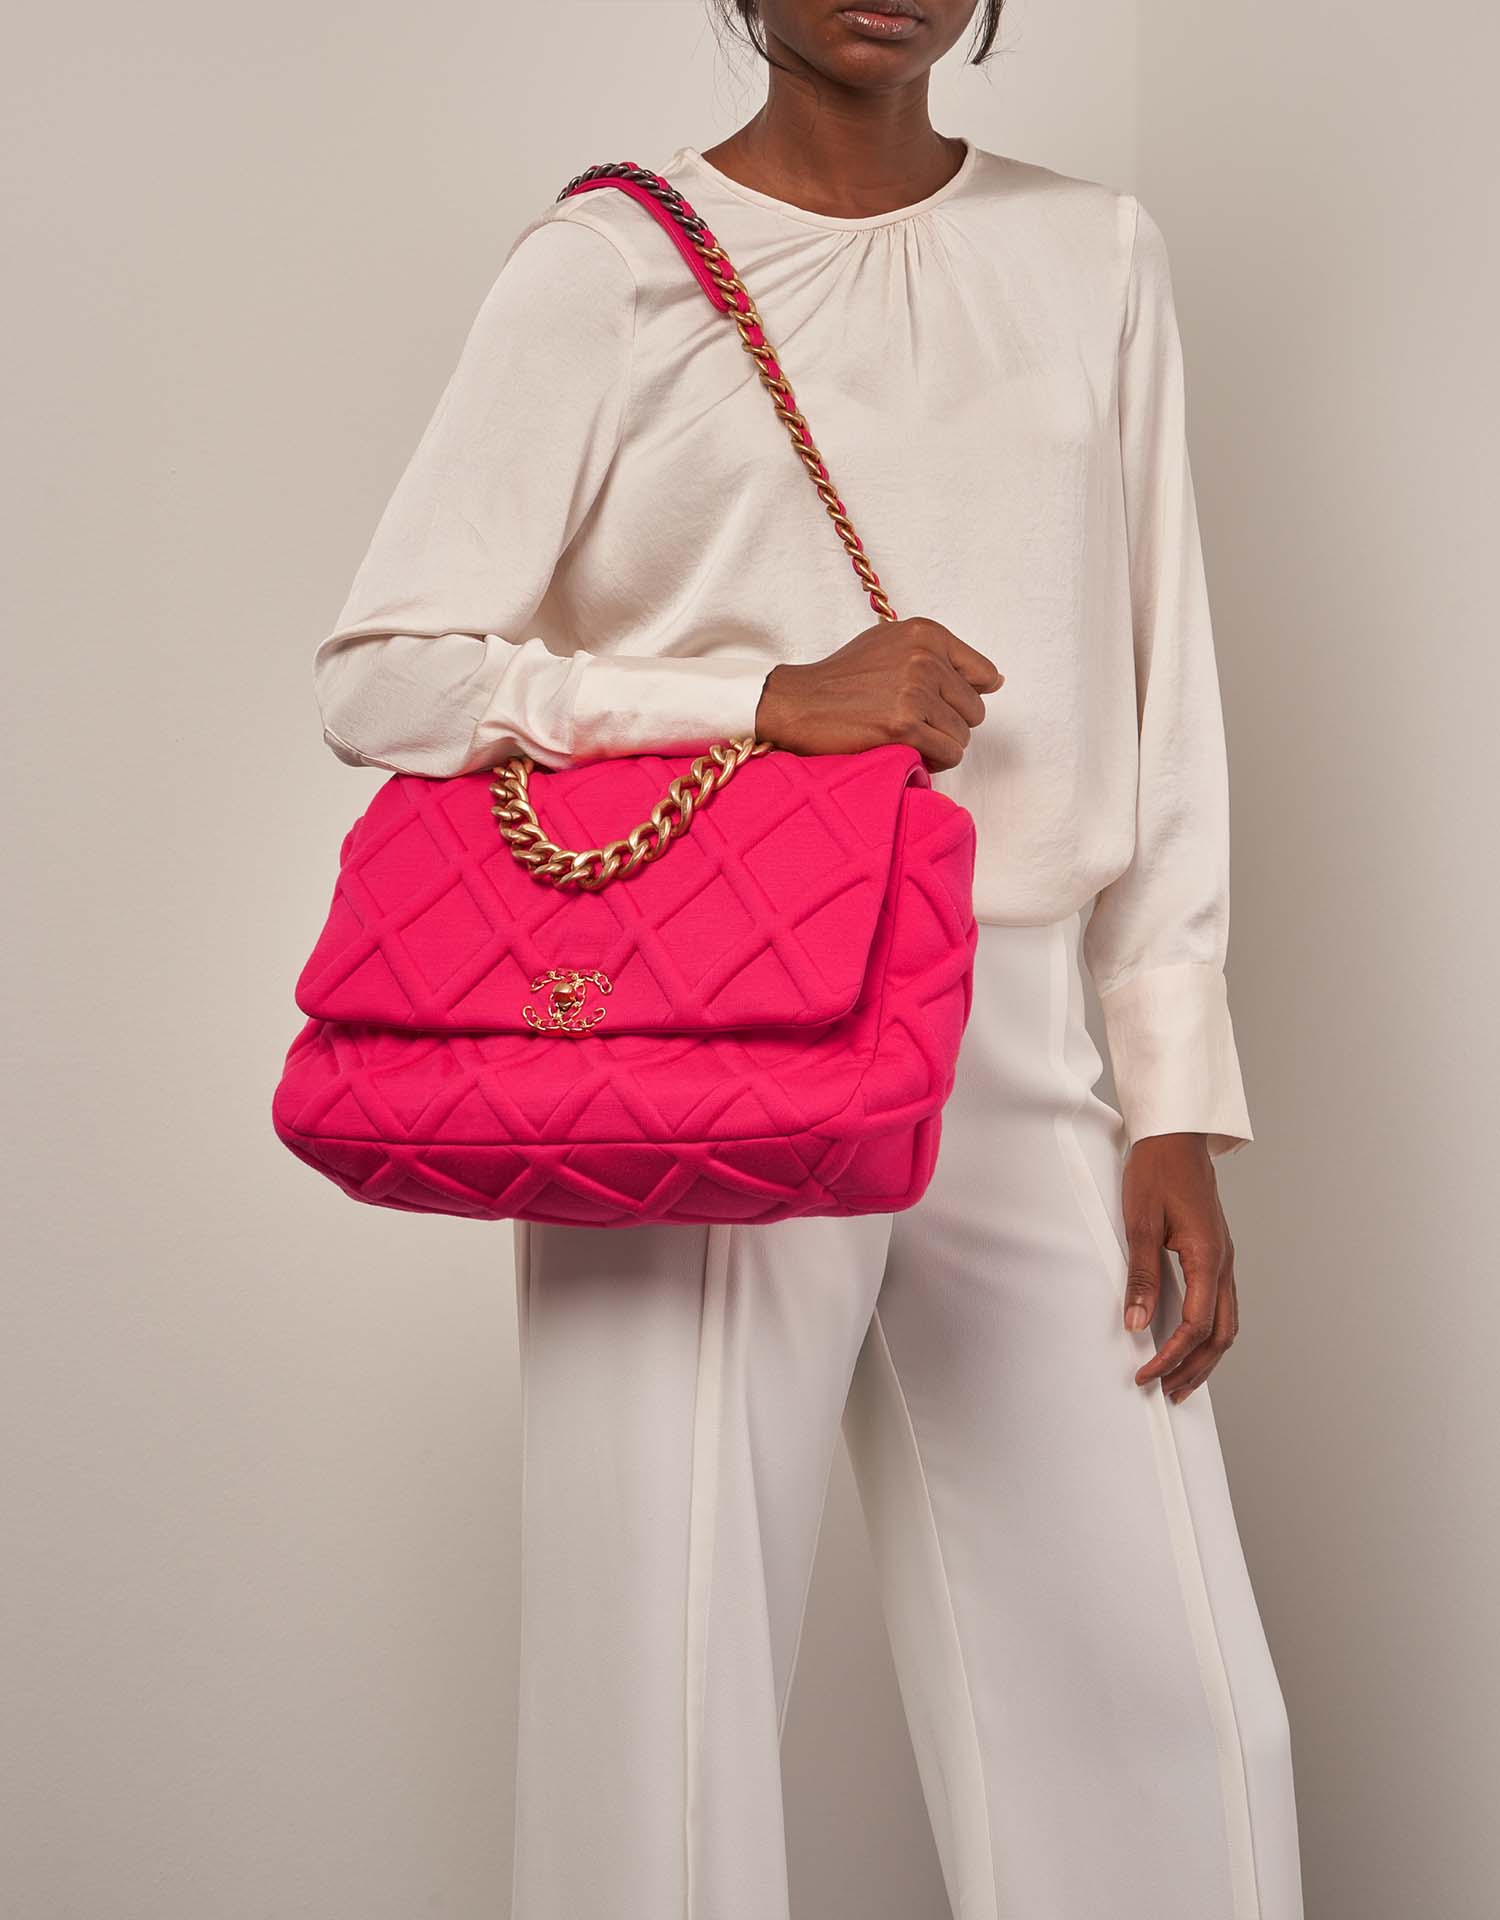 Chanel 19 MaxiFlapBag HotPink on Model | Sell your designer bag on Saclab.com